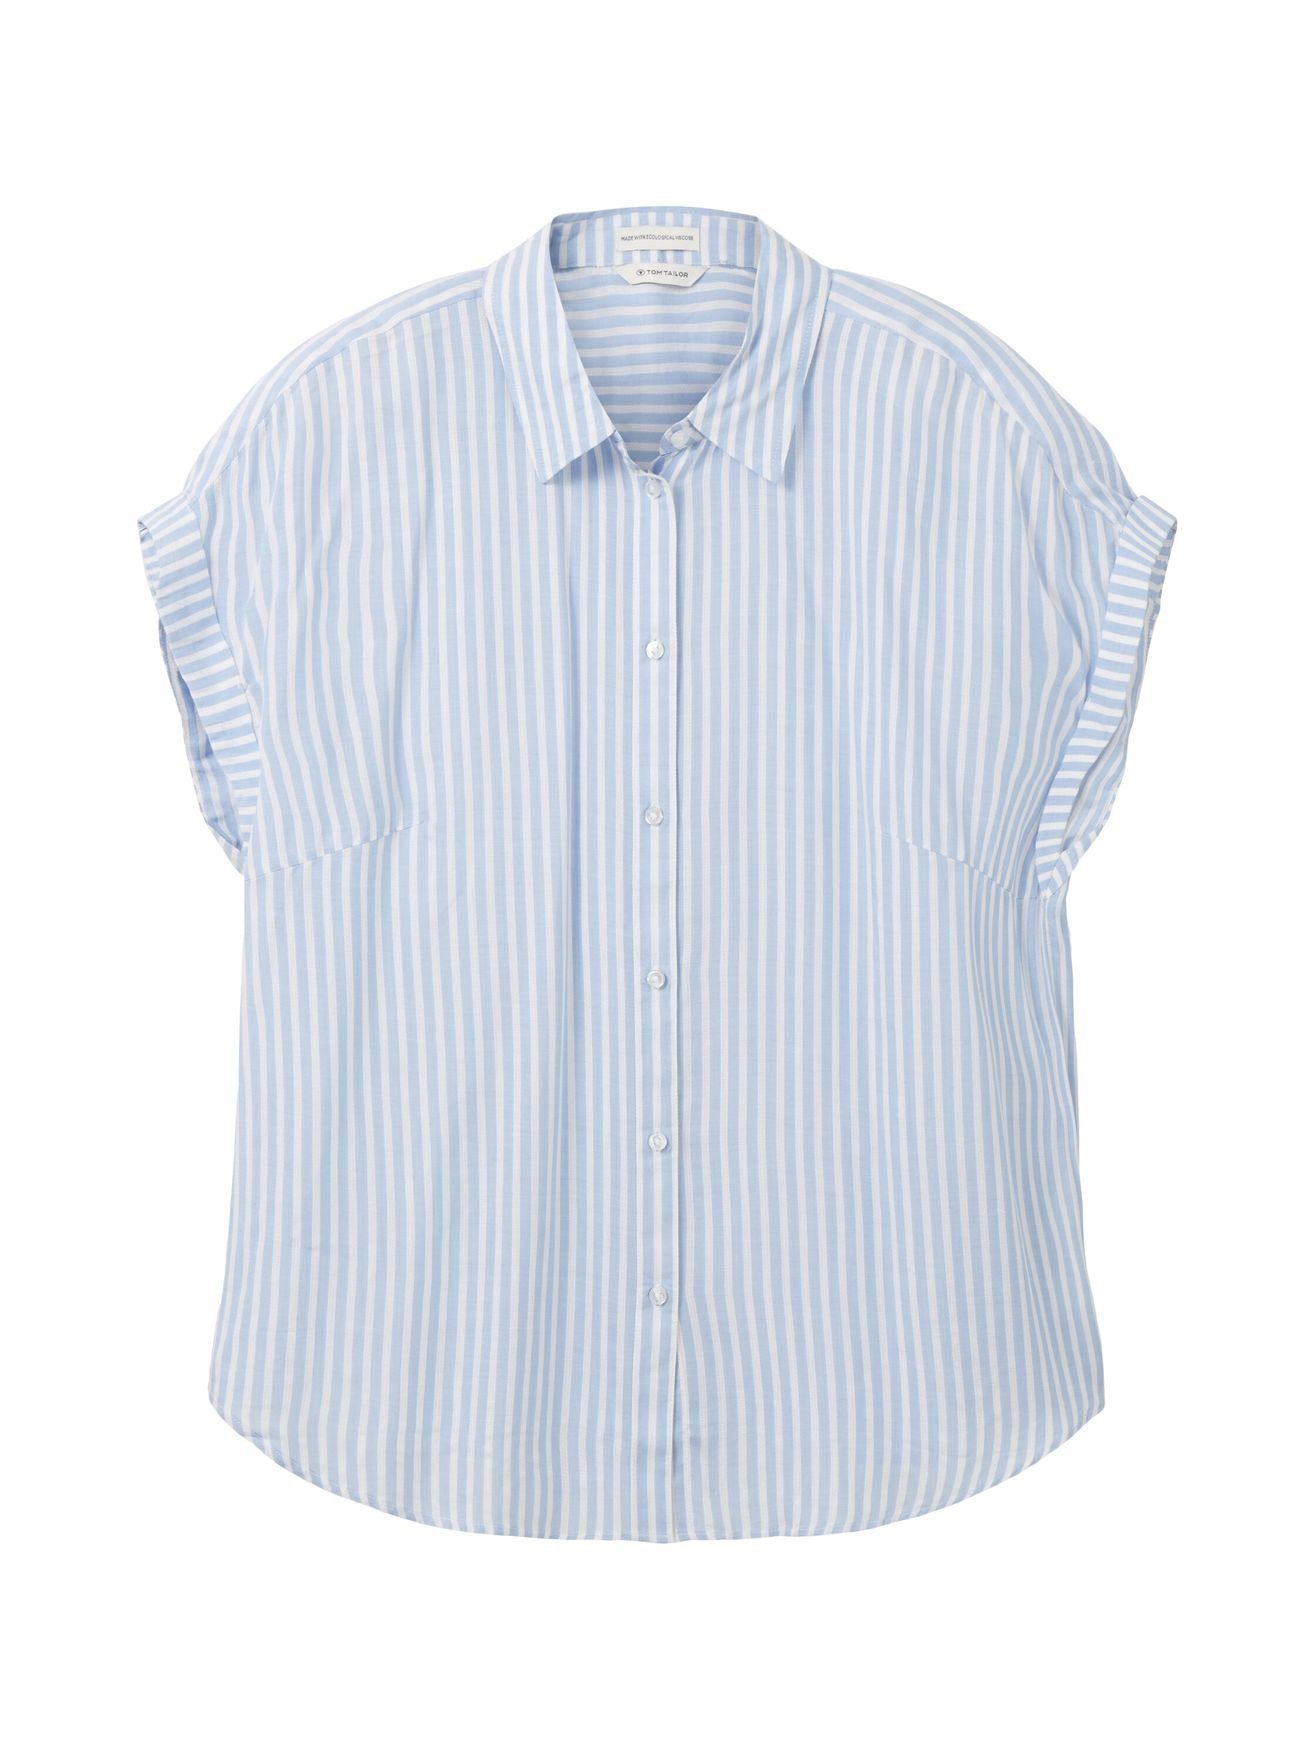 TOM TAILOR PLUS TOM TAILOR Blusenshirt Gestreifte Kurzarm Bluse Übergröße Shirt 5364 in Blau